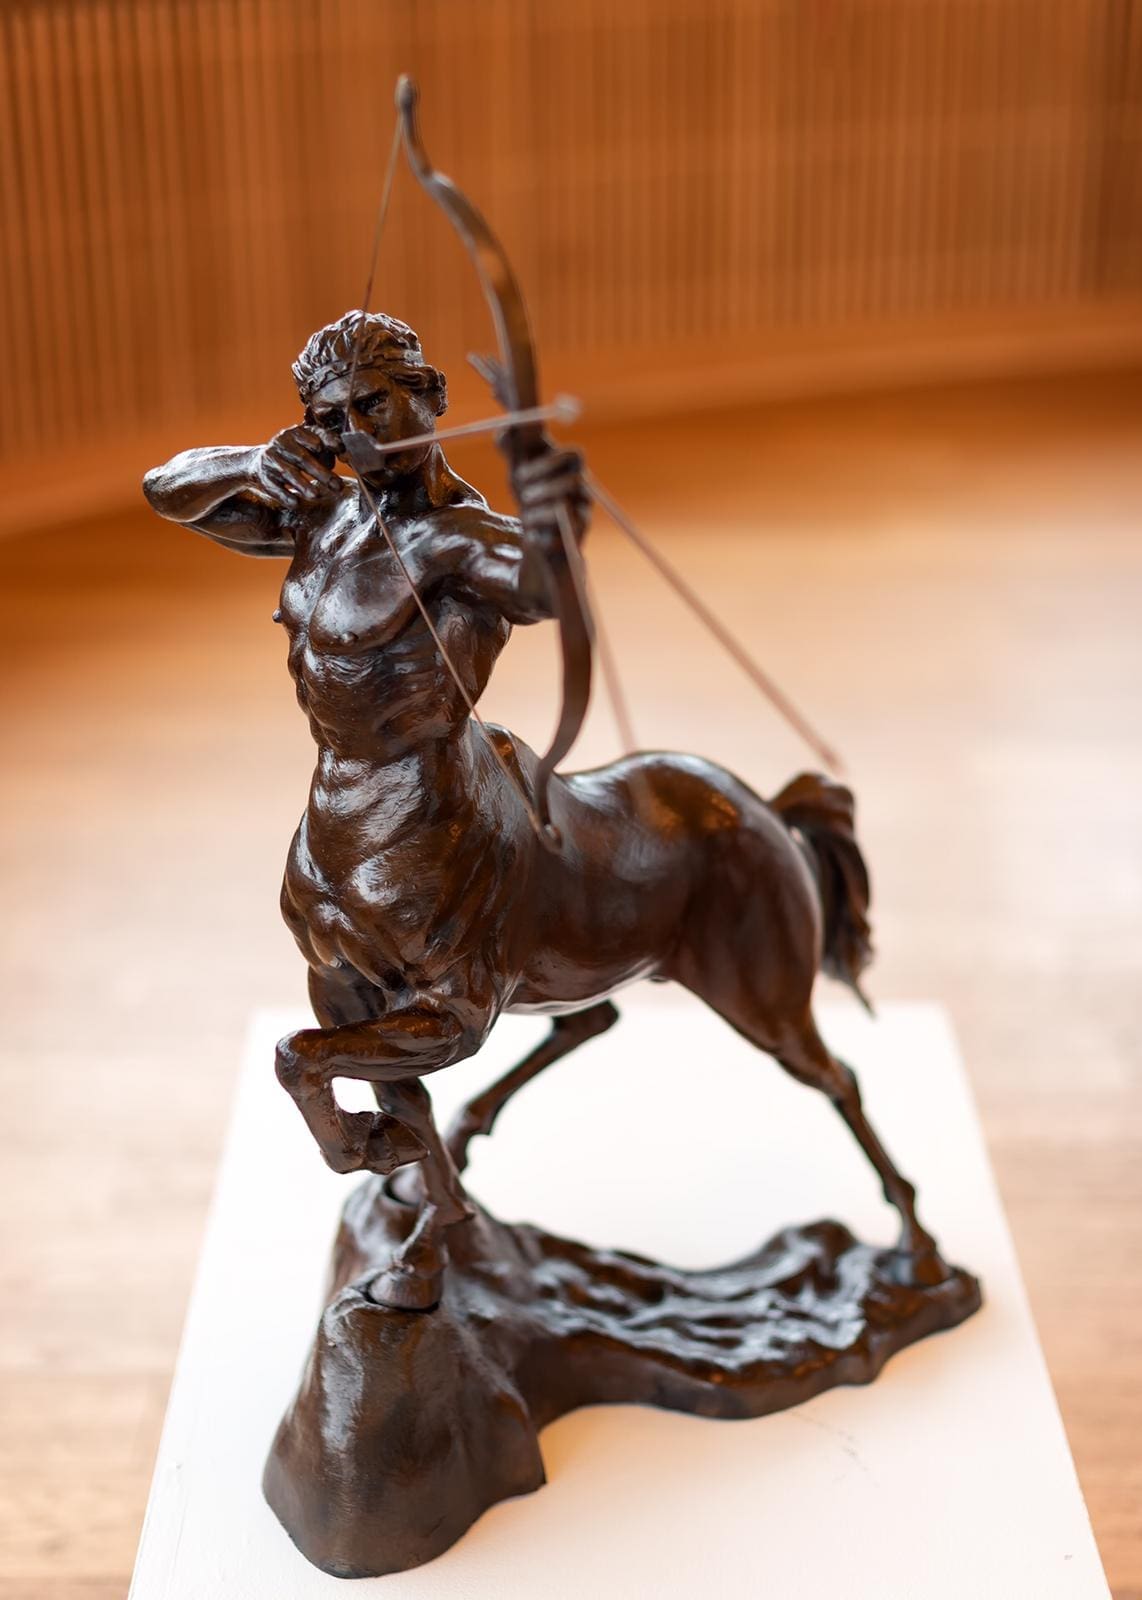 The Archer – Centaur Sculpture by Michael Keane